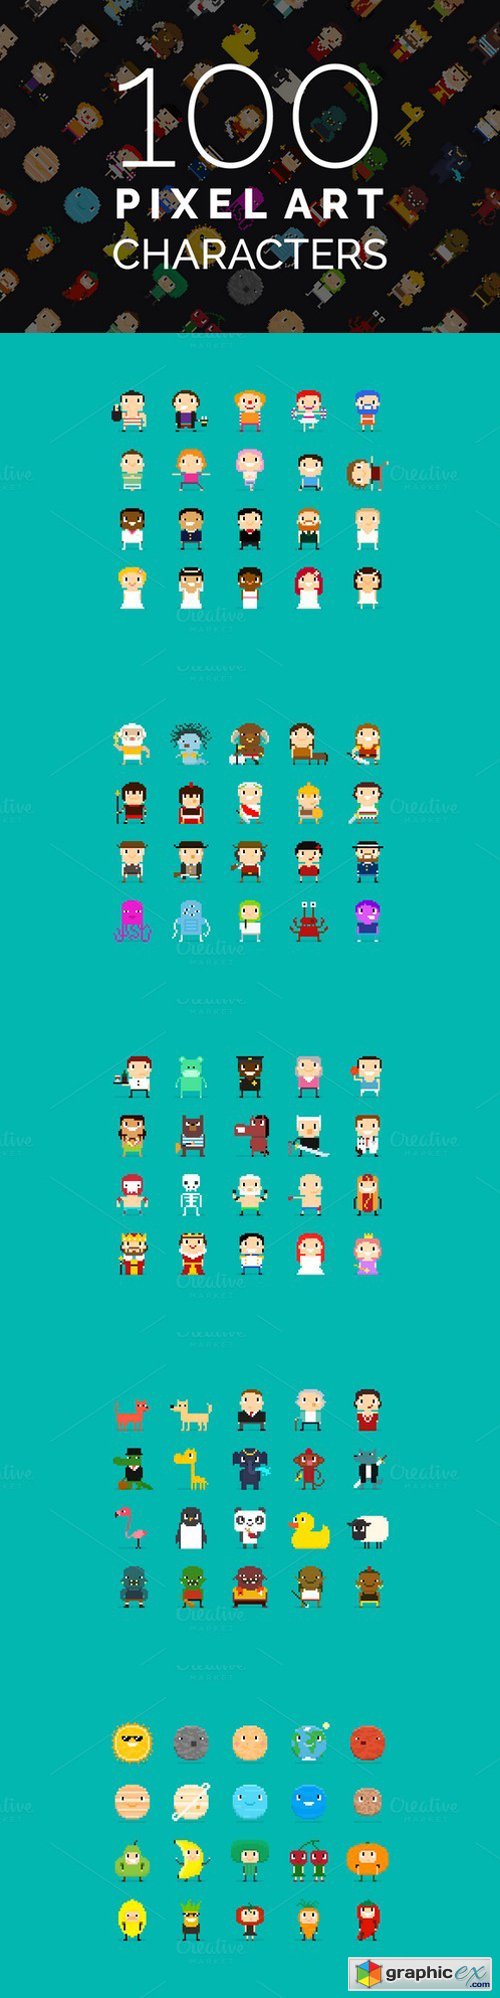 100 Pixel Art Characters